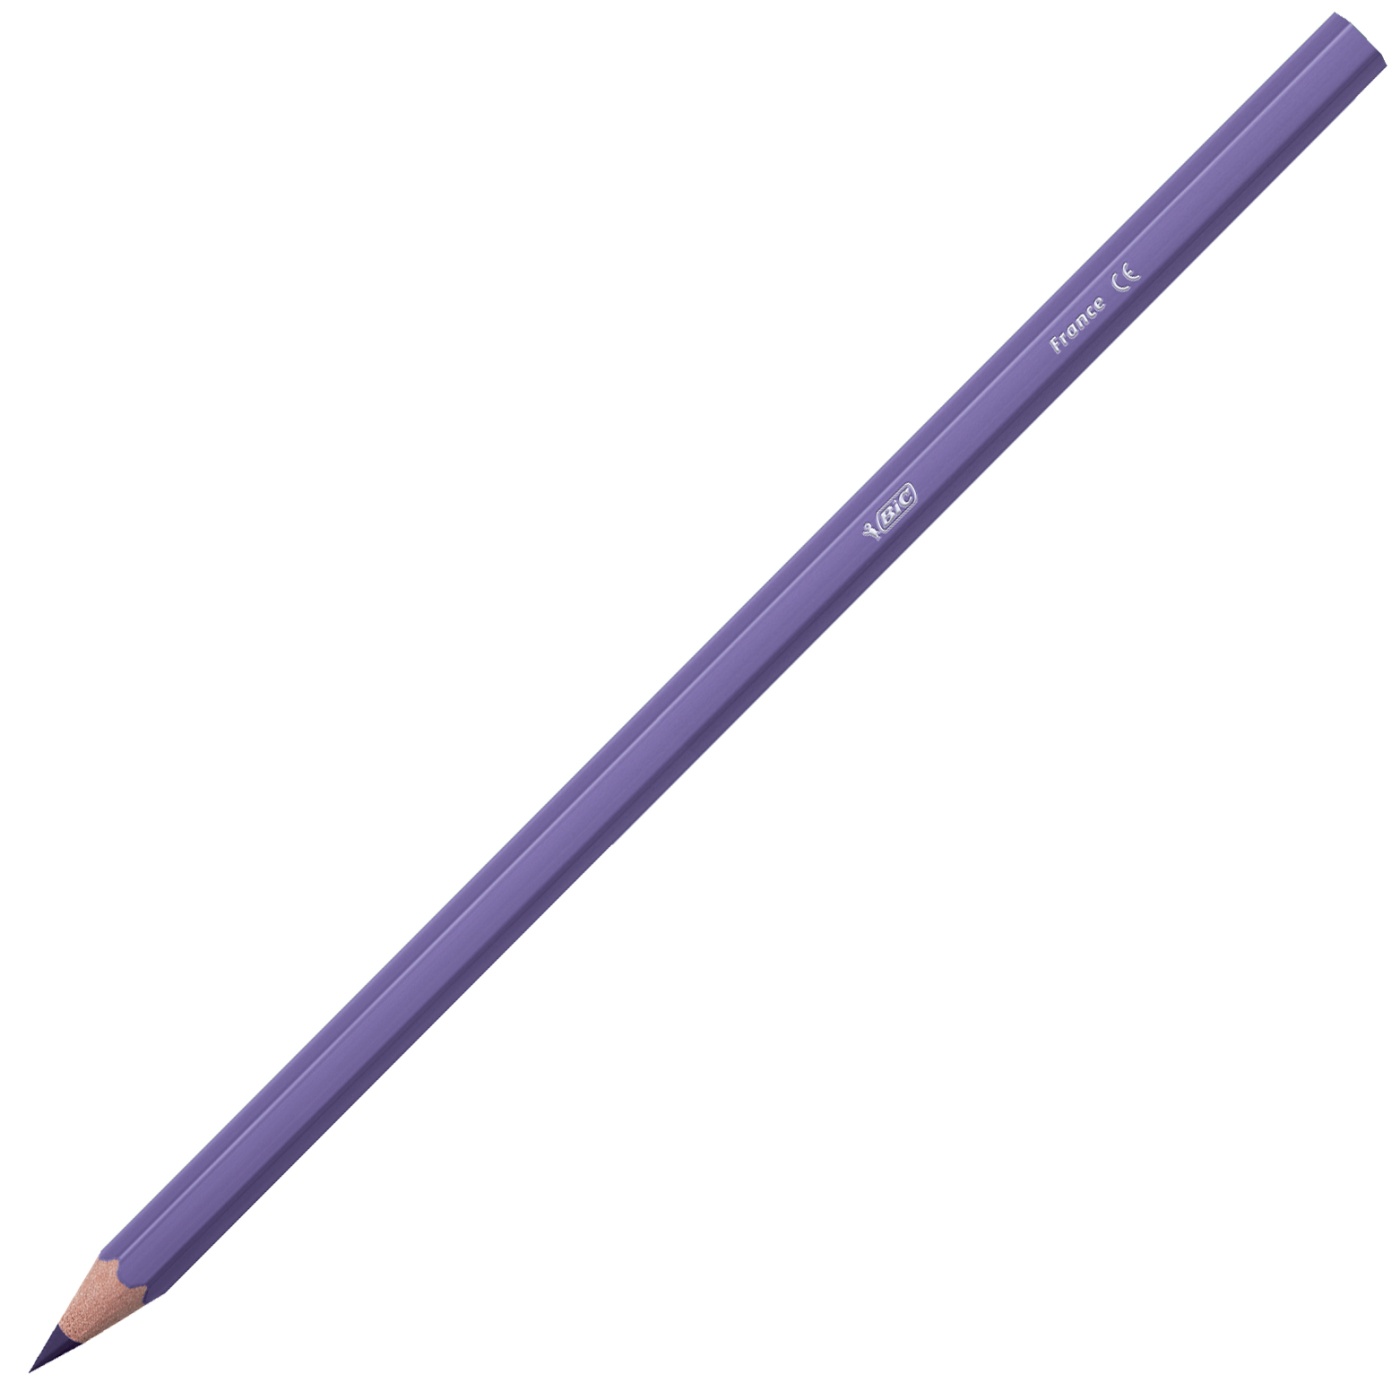 Kids Tropicolors Coloring Pencils 24-set in the group Kids / Kids' Pens / 5 Years+ at Pen Store (100241)